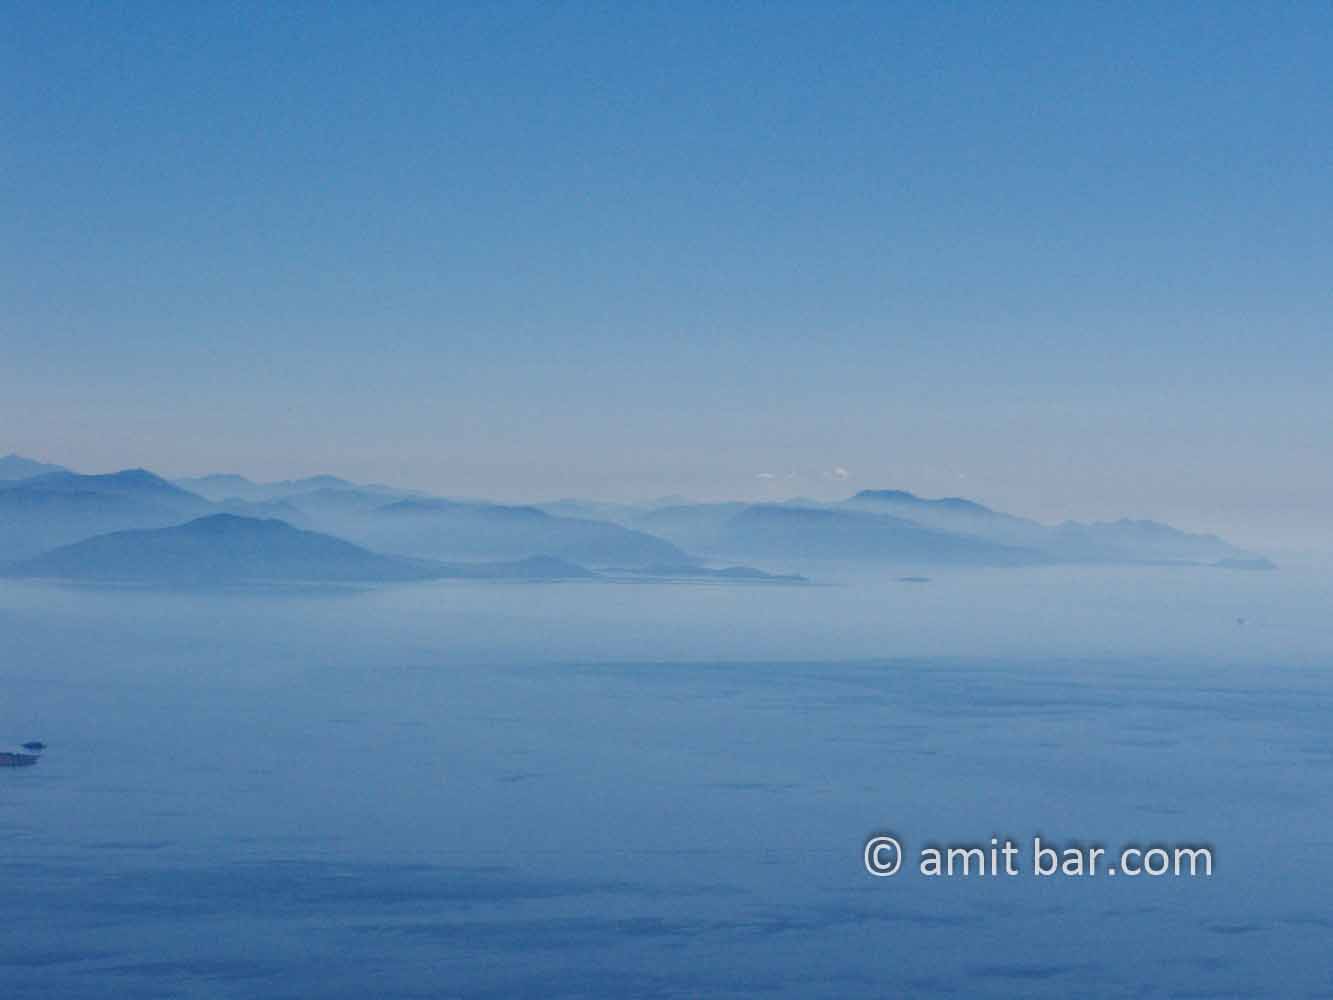 Corfu: Misty view: Mist above the Bay of Corfu